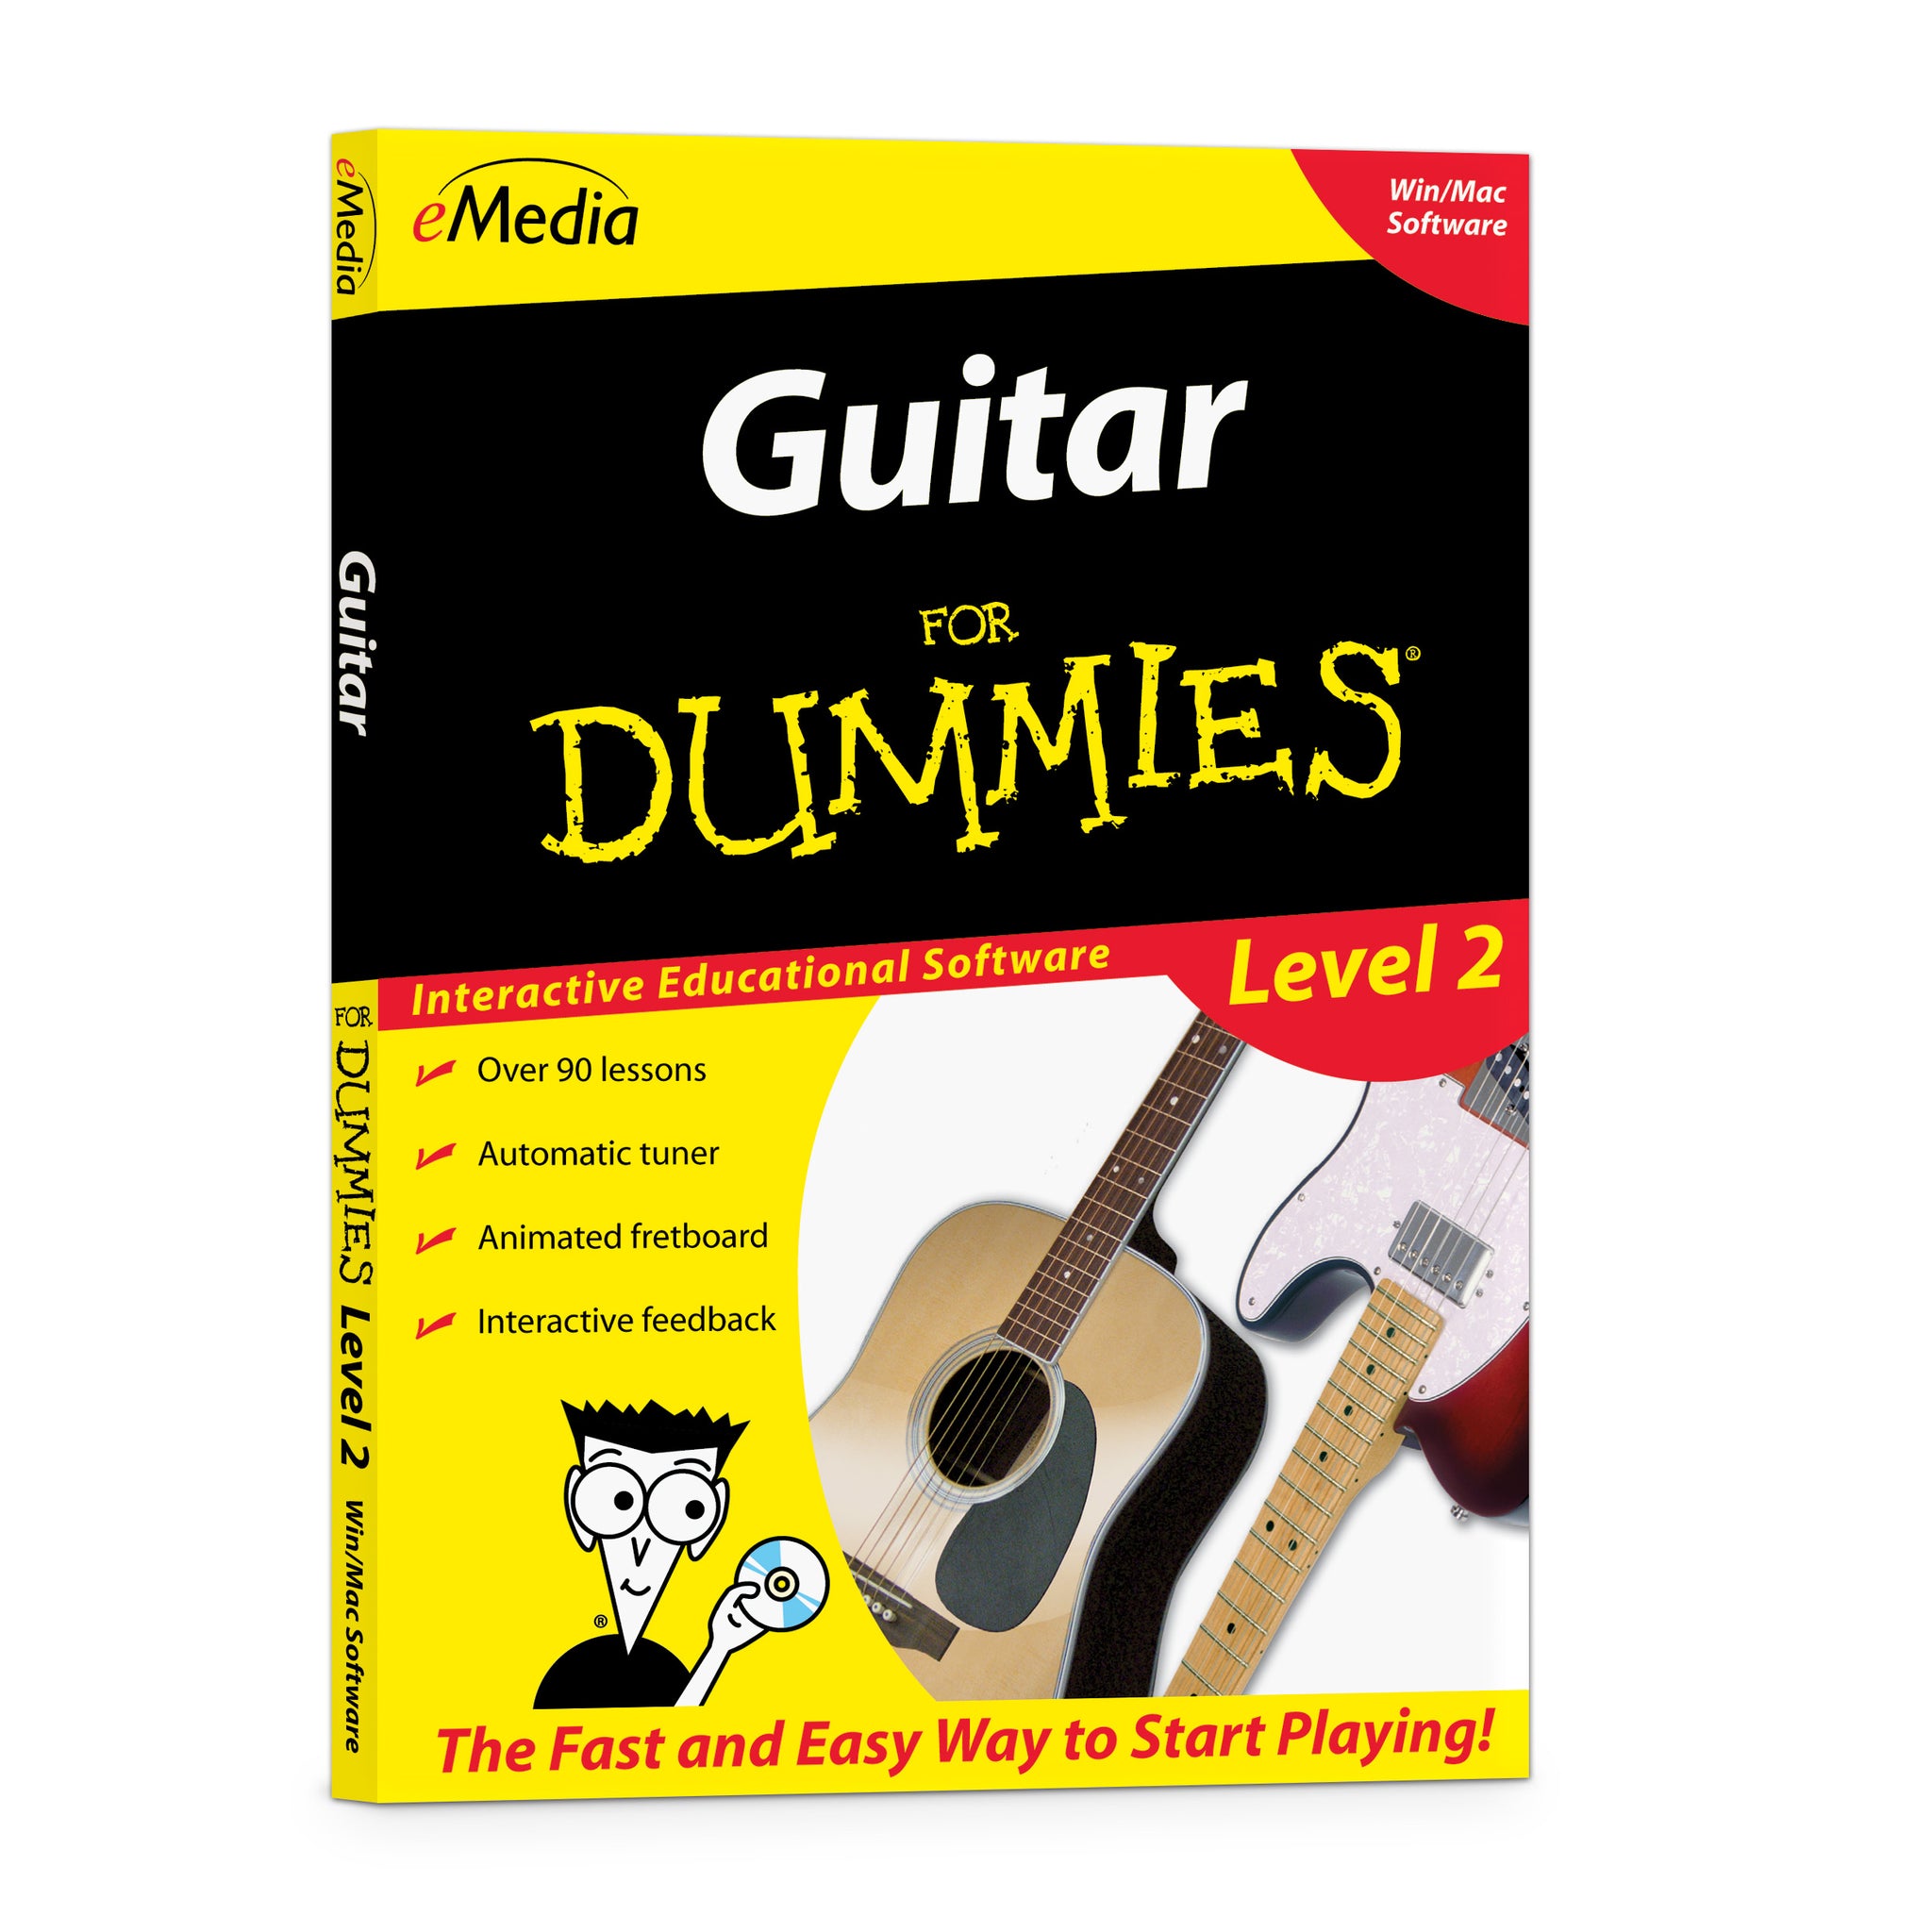 eMedia Guitar For Dummies Level 2